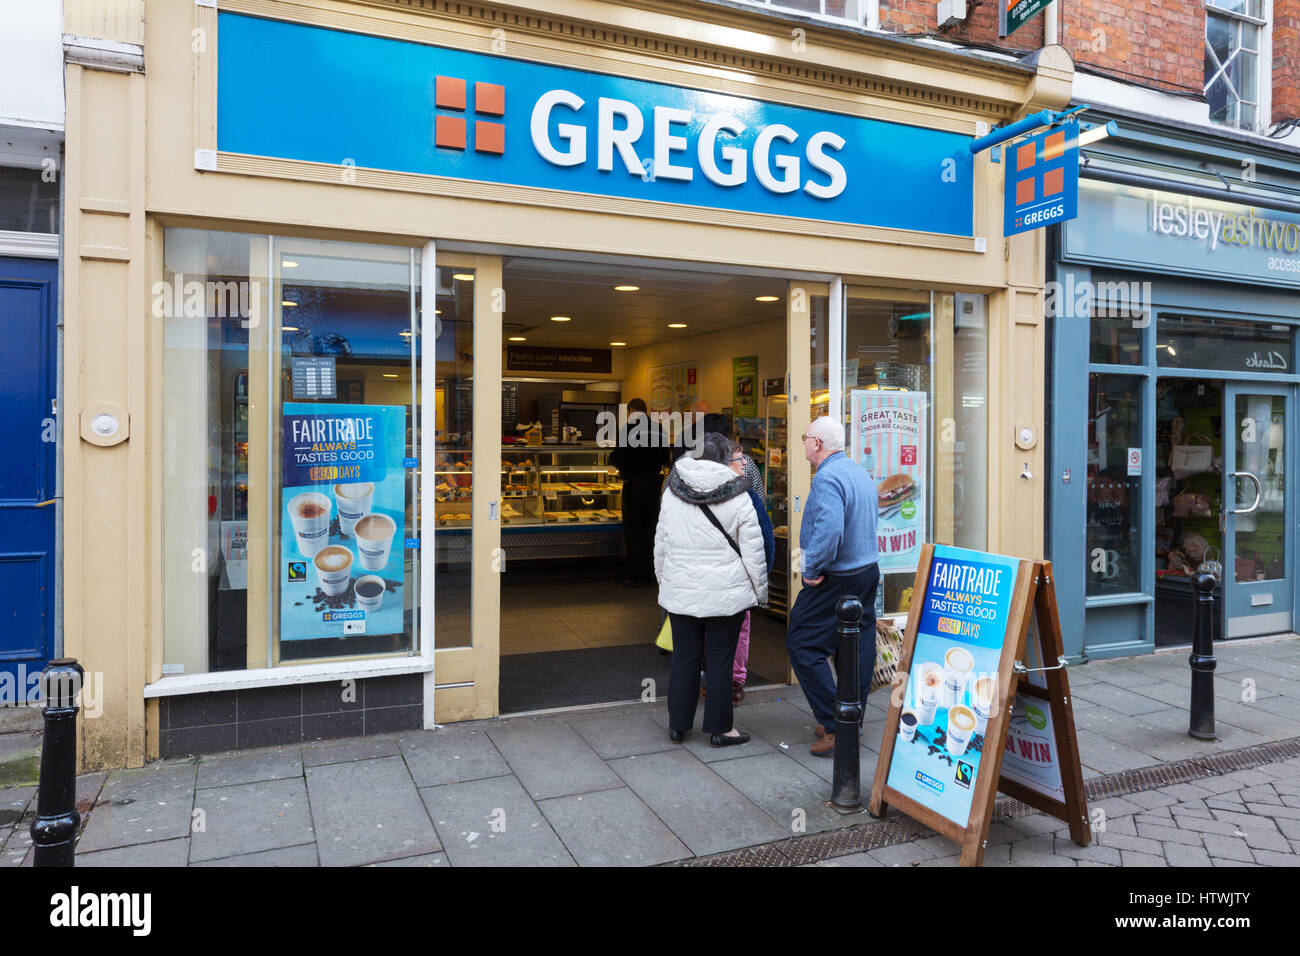 Greggs Bakery Shop exterior, Evesham, Worcestershire England UK Banque D'Images